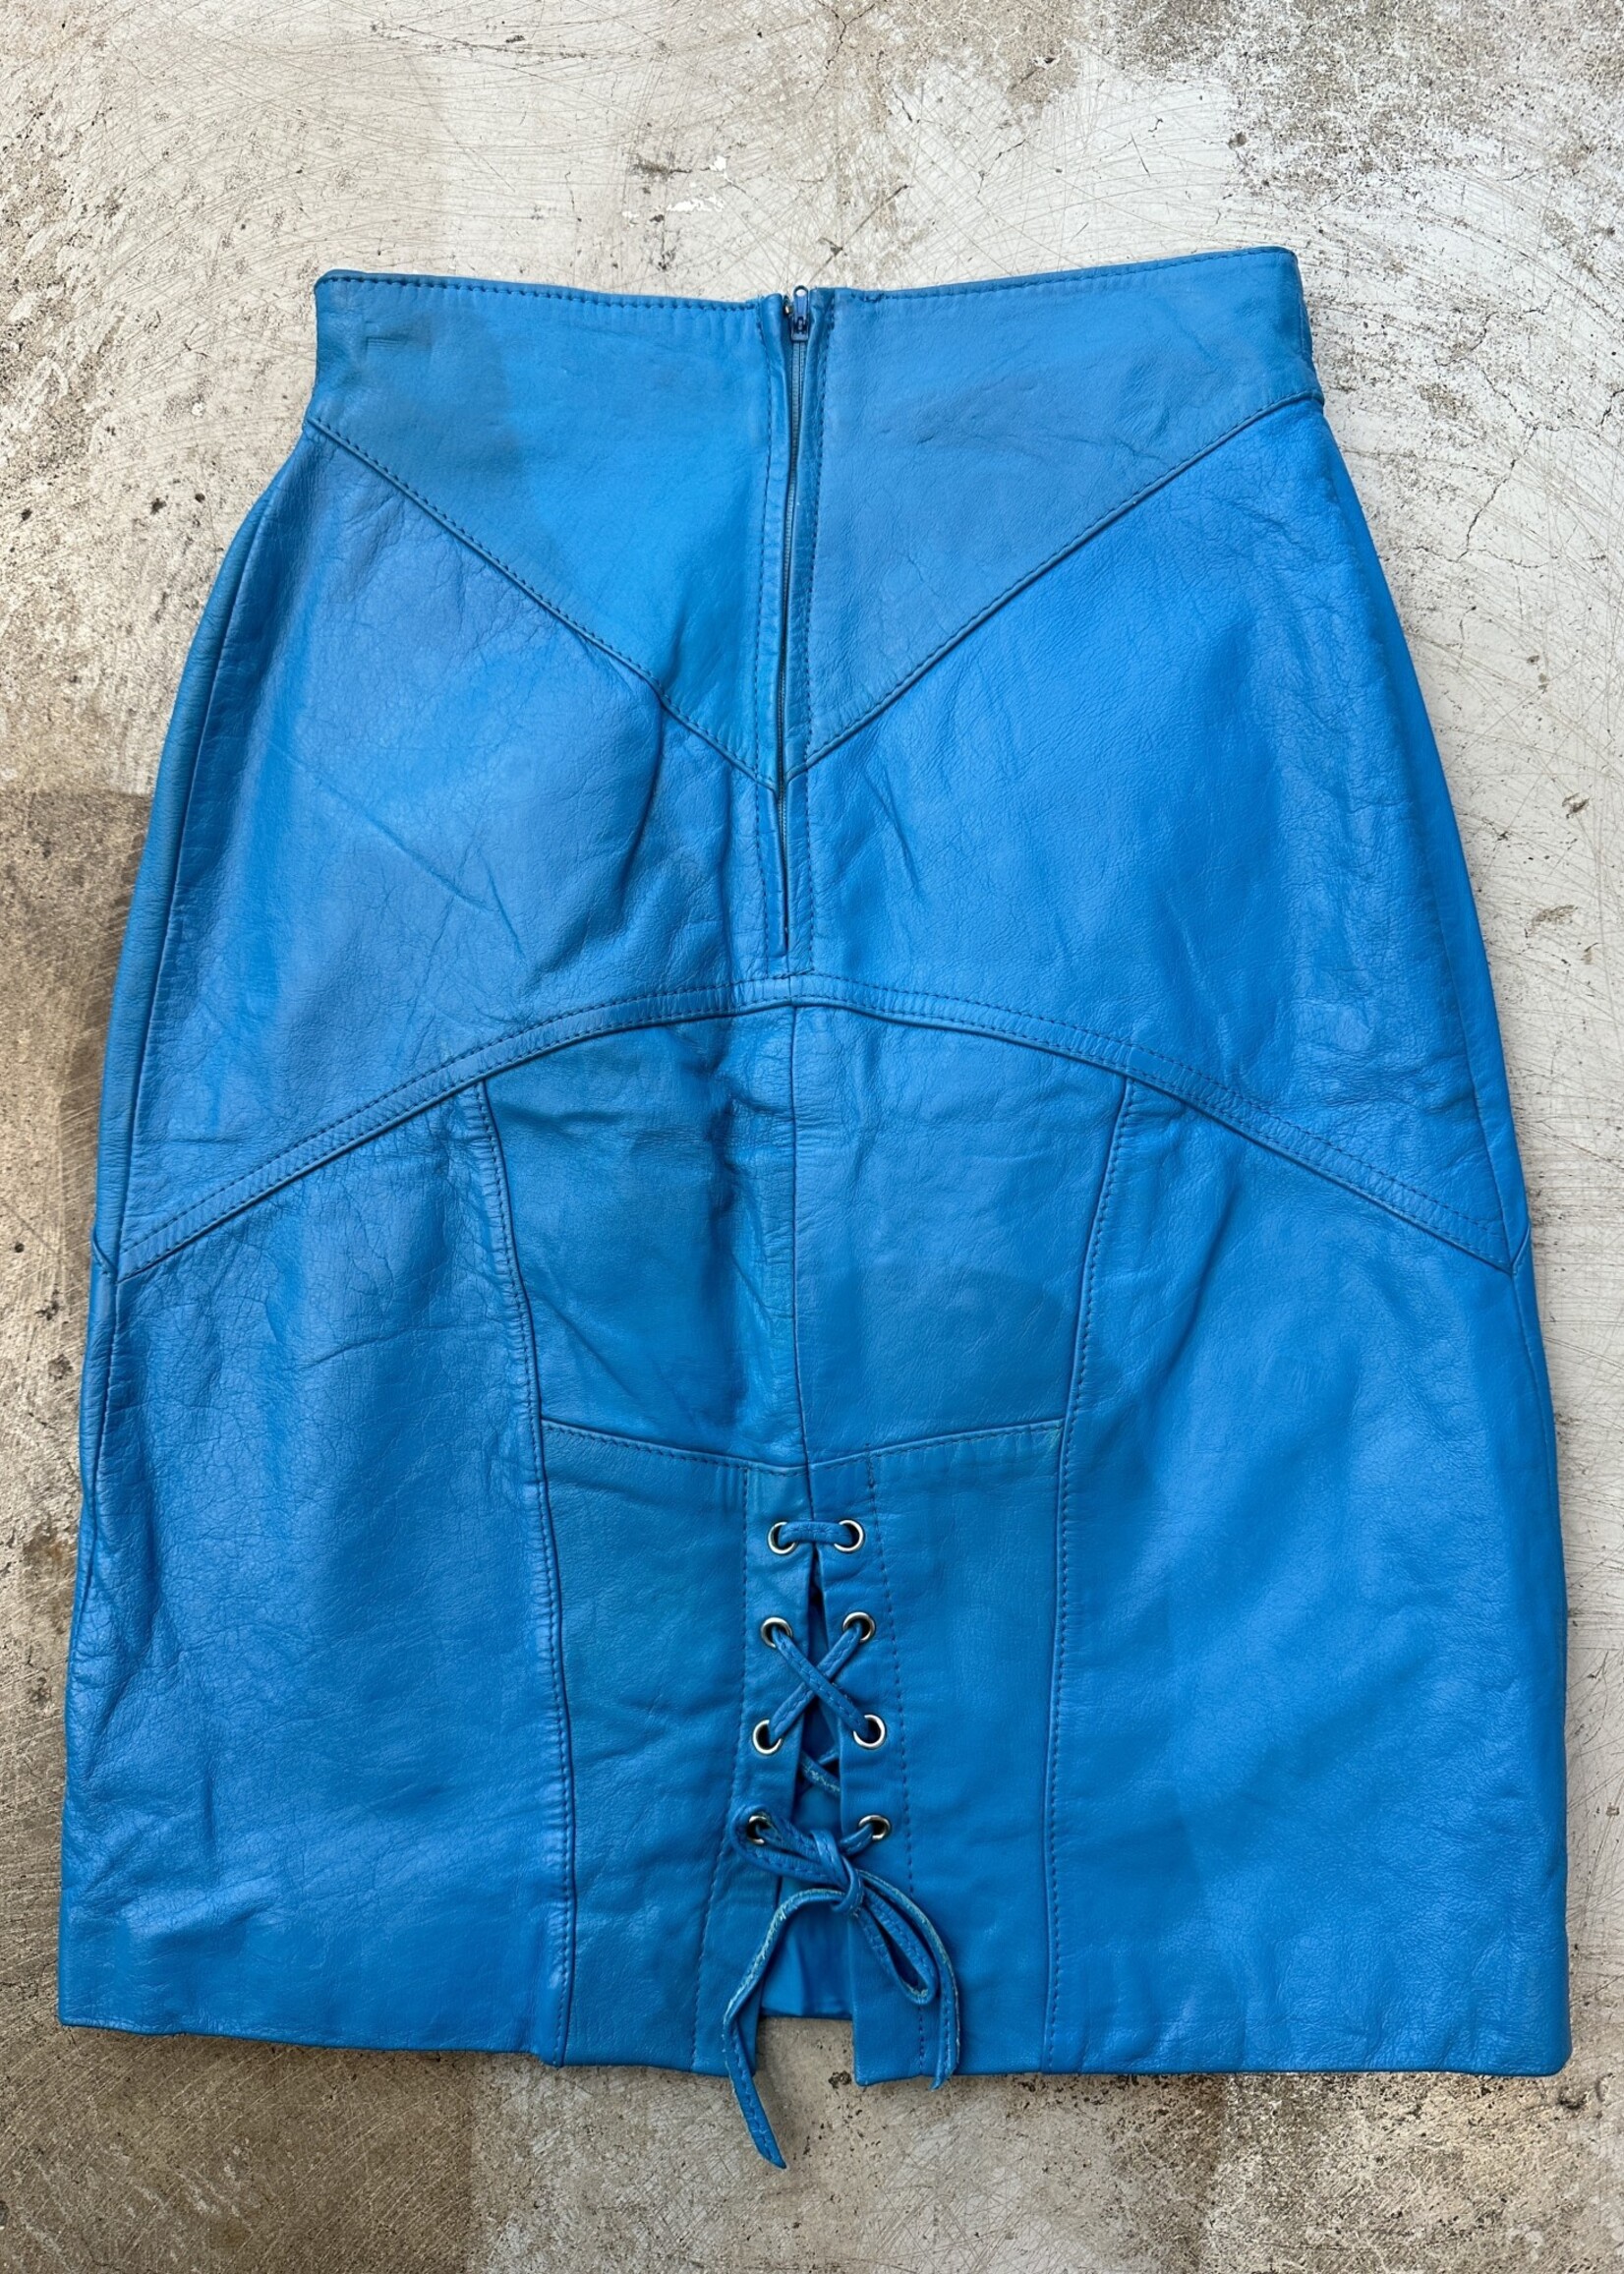 Vintage Chia Blue Leather Skirt 24